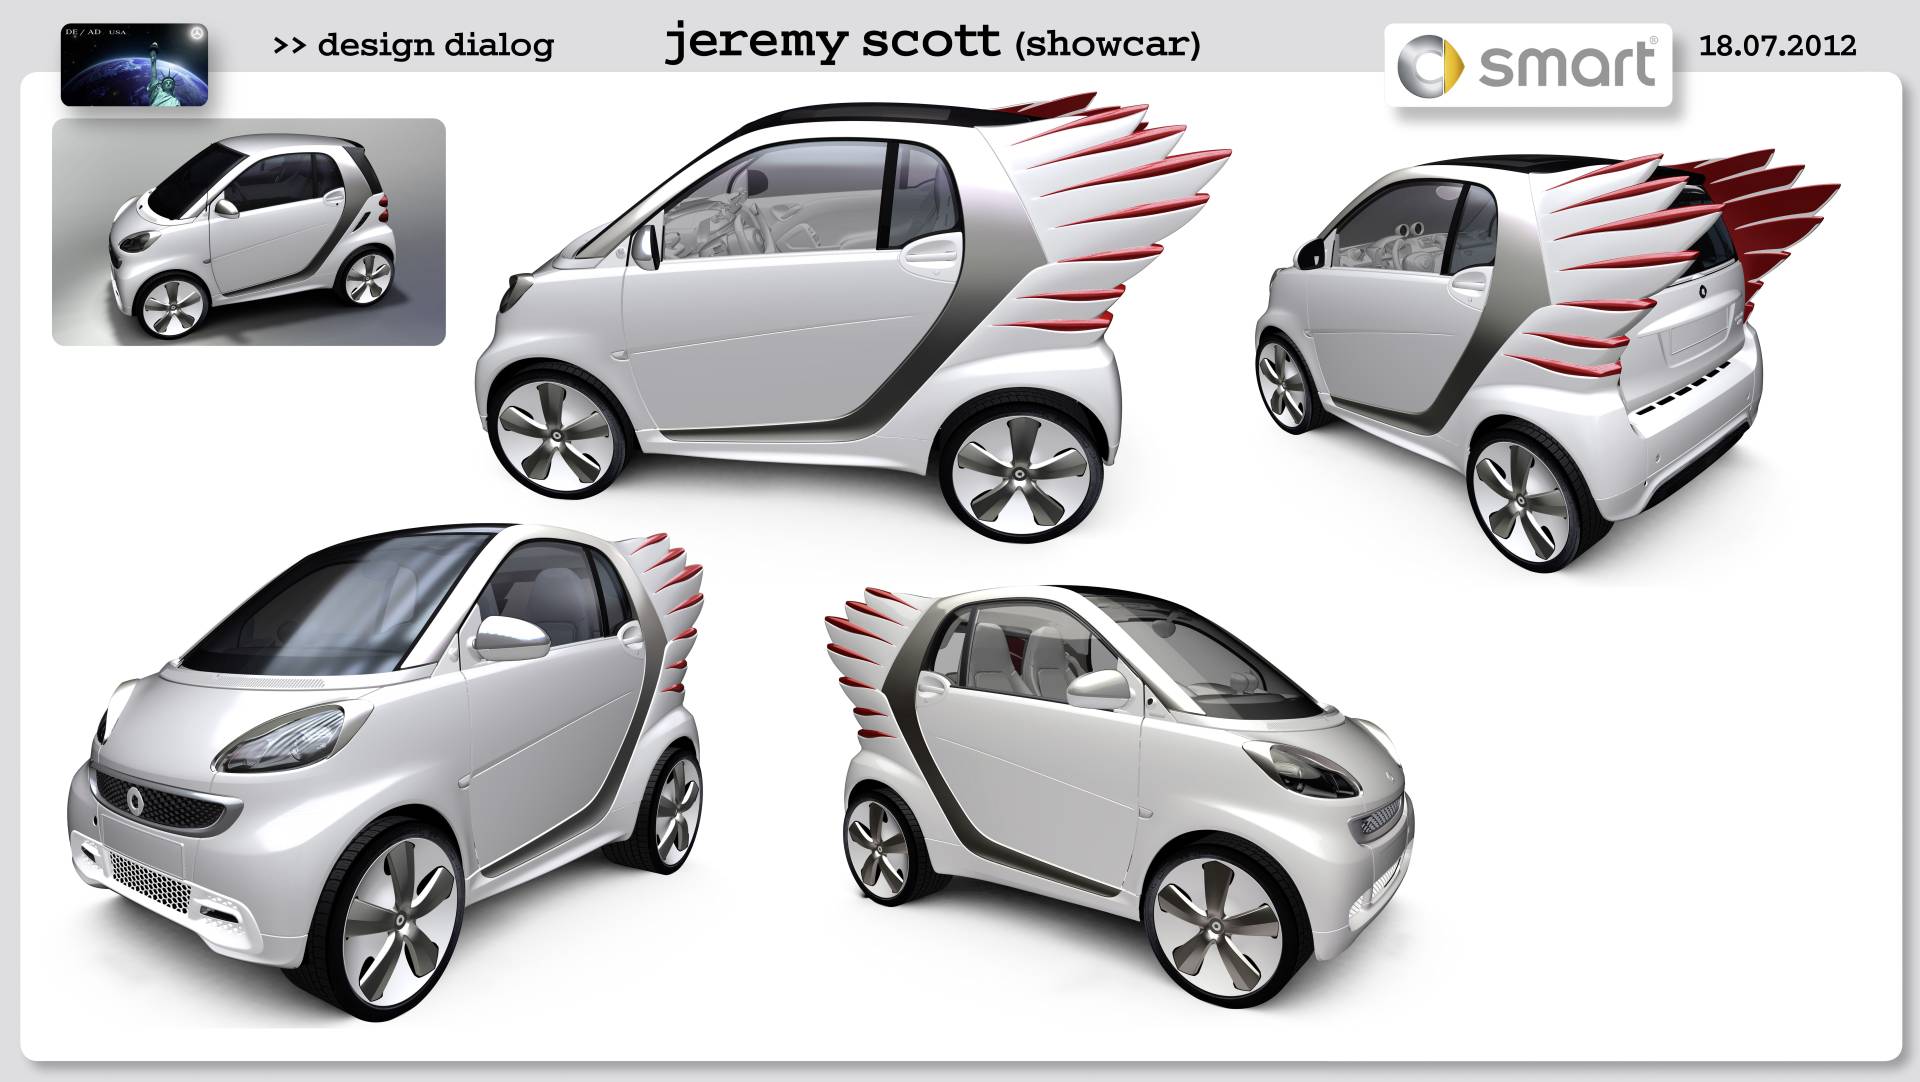 2013 Smart fortwo Jeremy Scott Concept